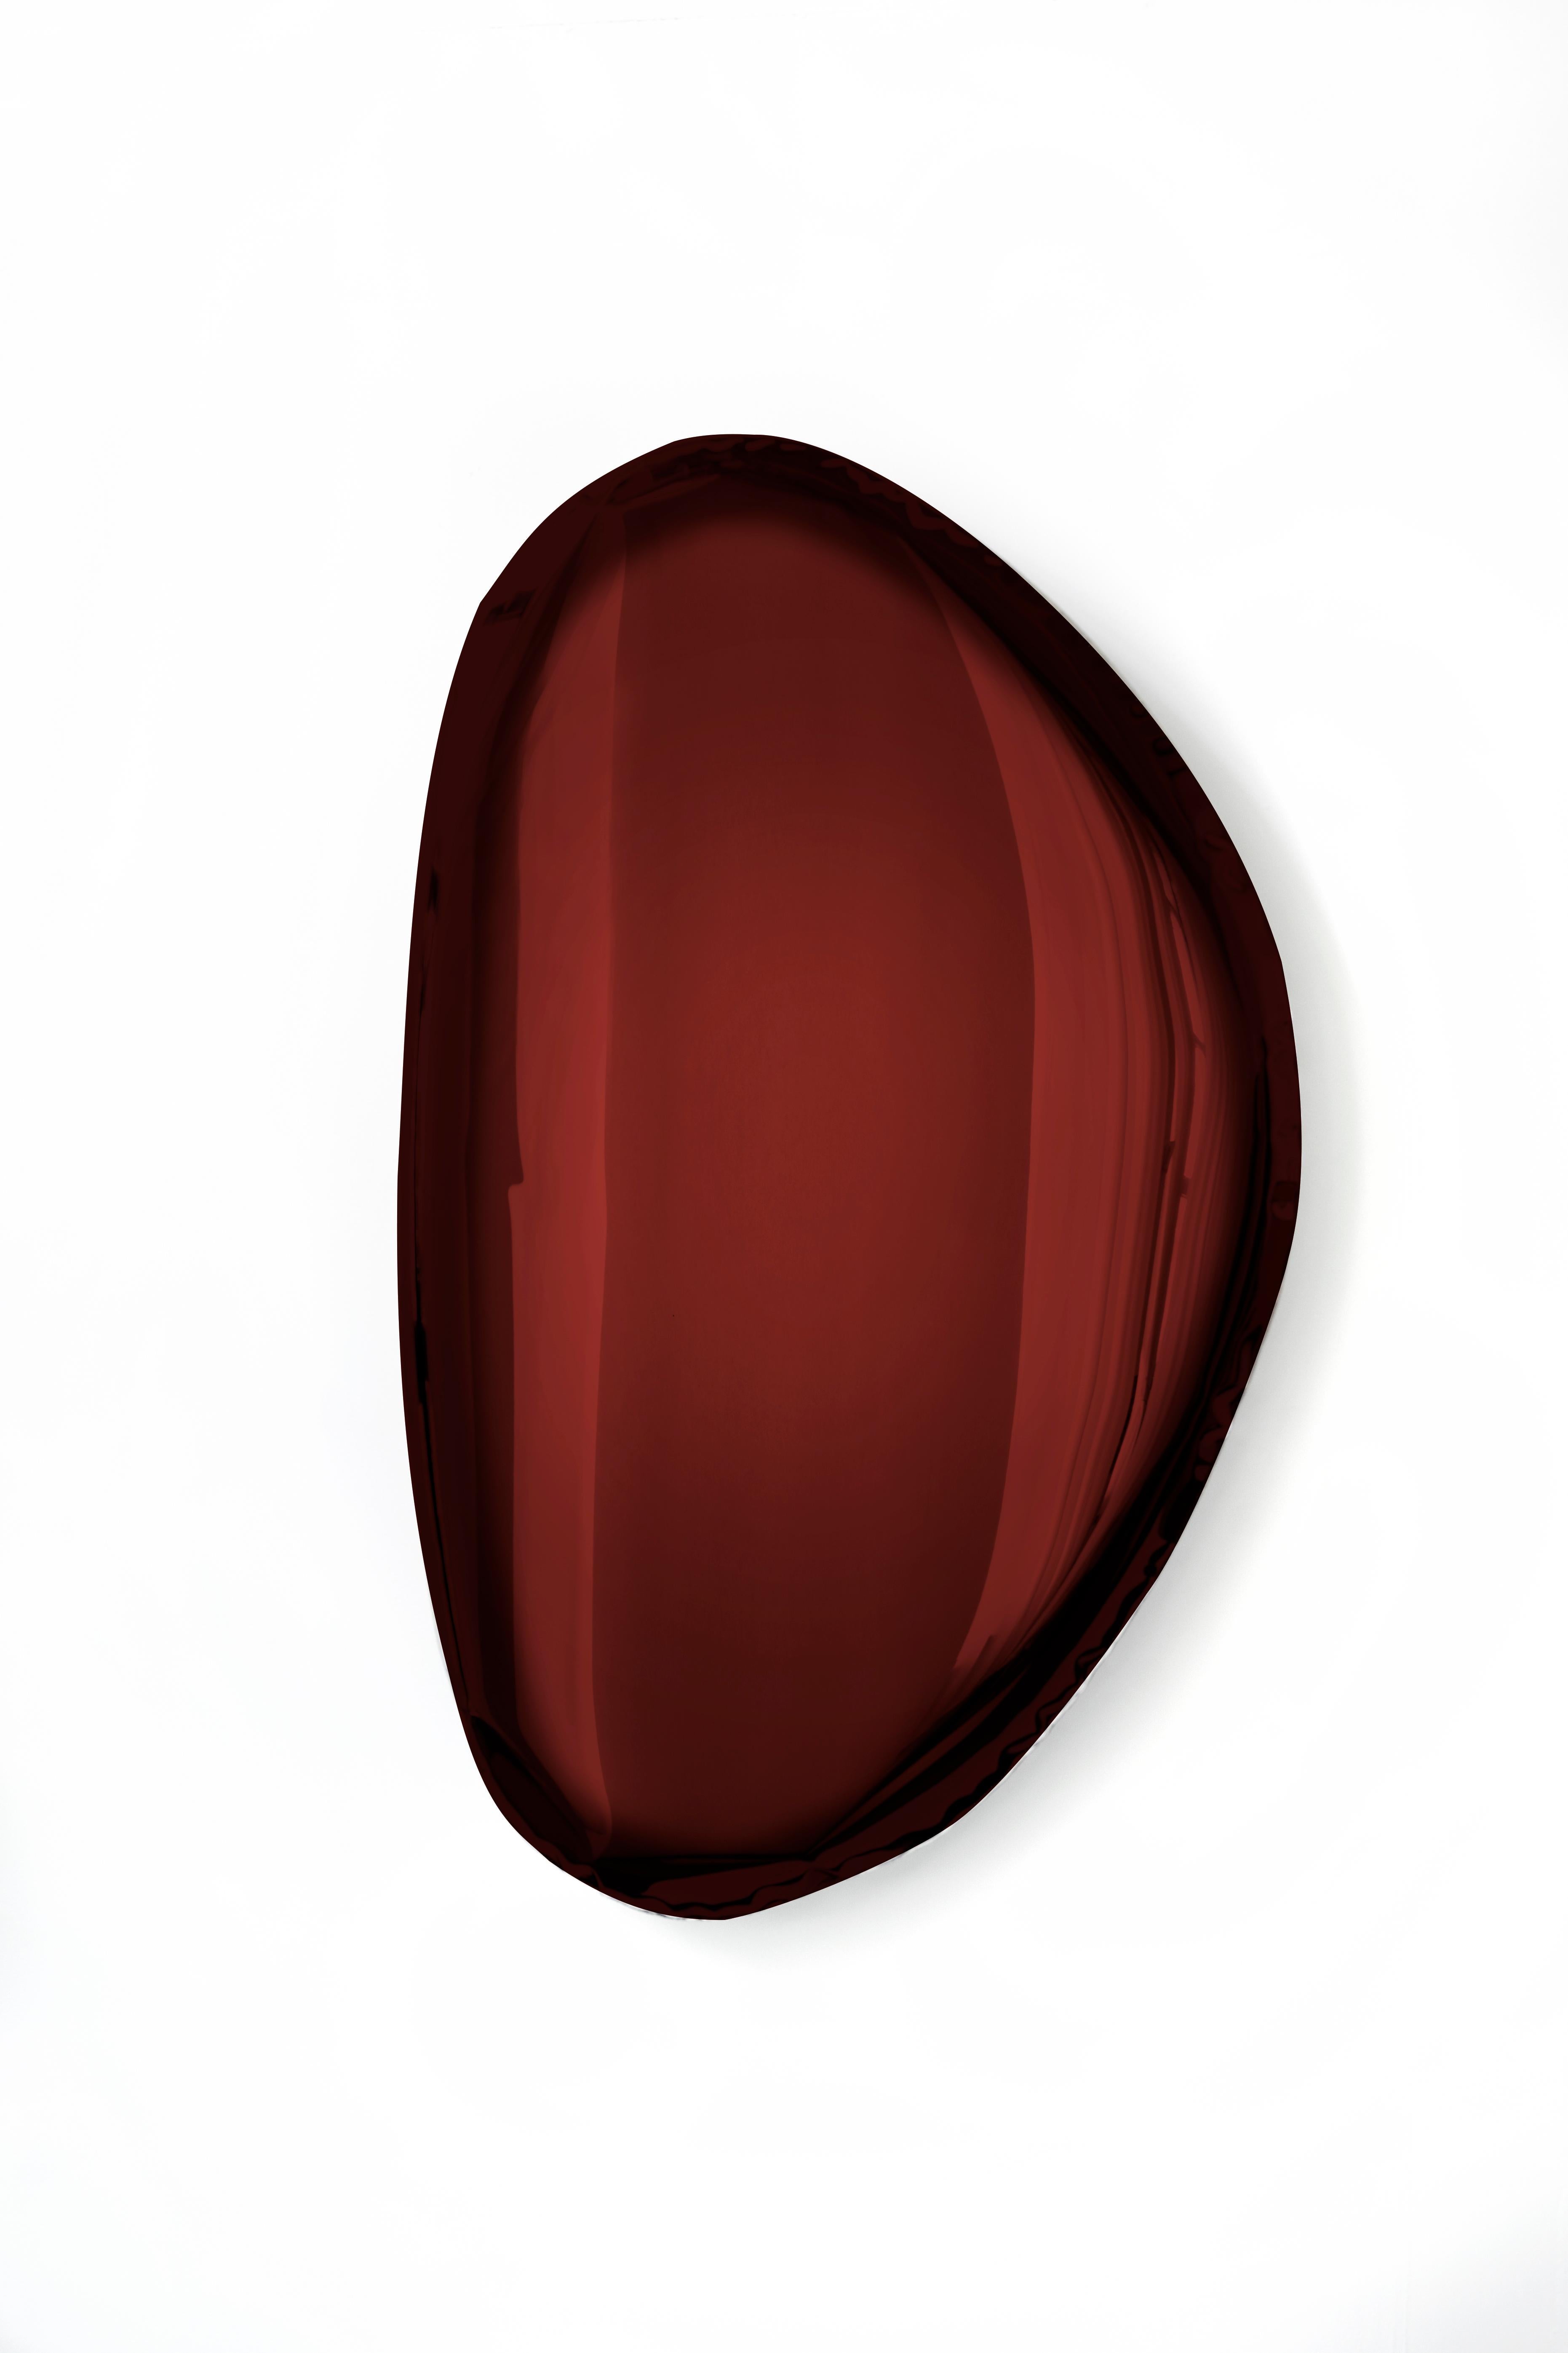 Minimalist Mirror Tafla O3 Rubin Red, in Polished Stainless Steel by Zieta For Sale